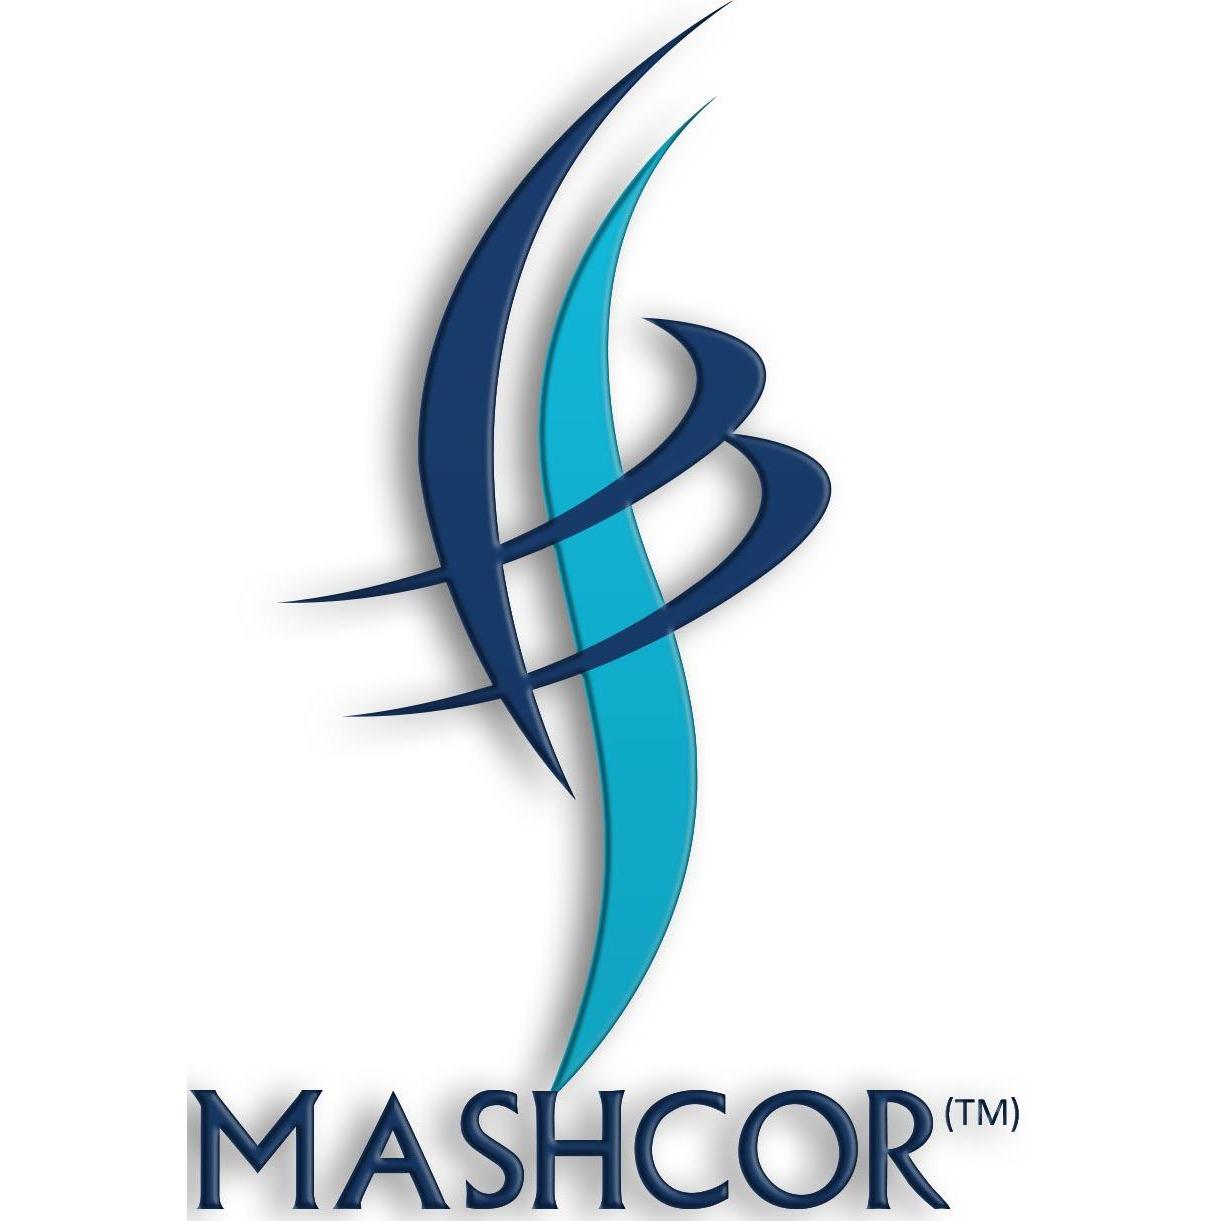 Mashcor Digital Marketing Agency Cape Town